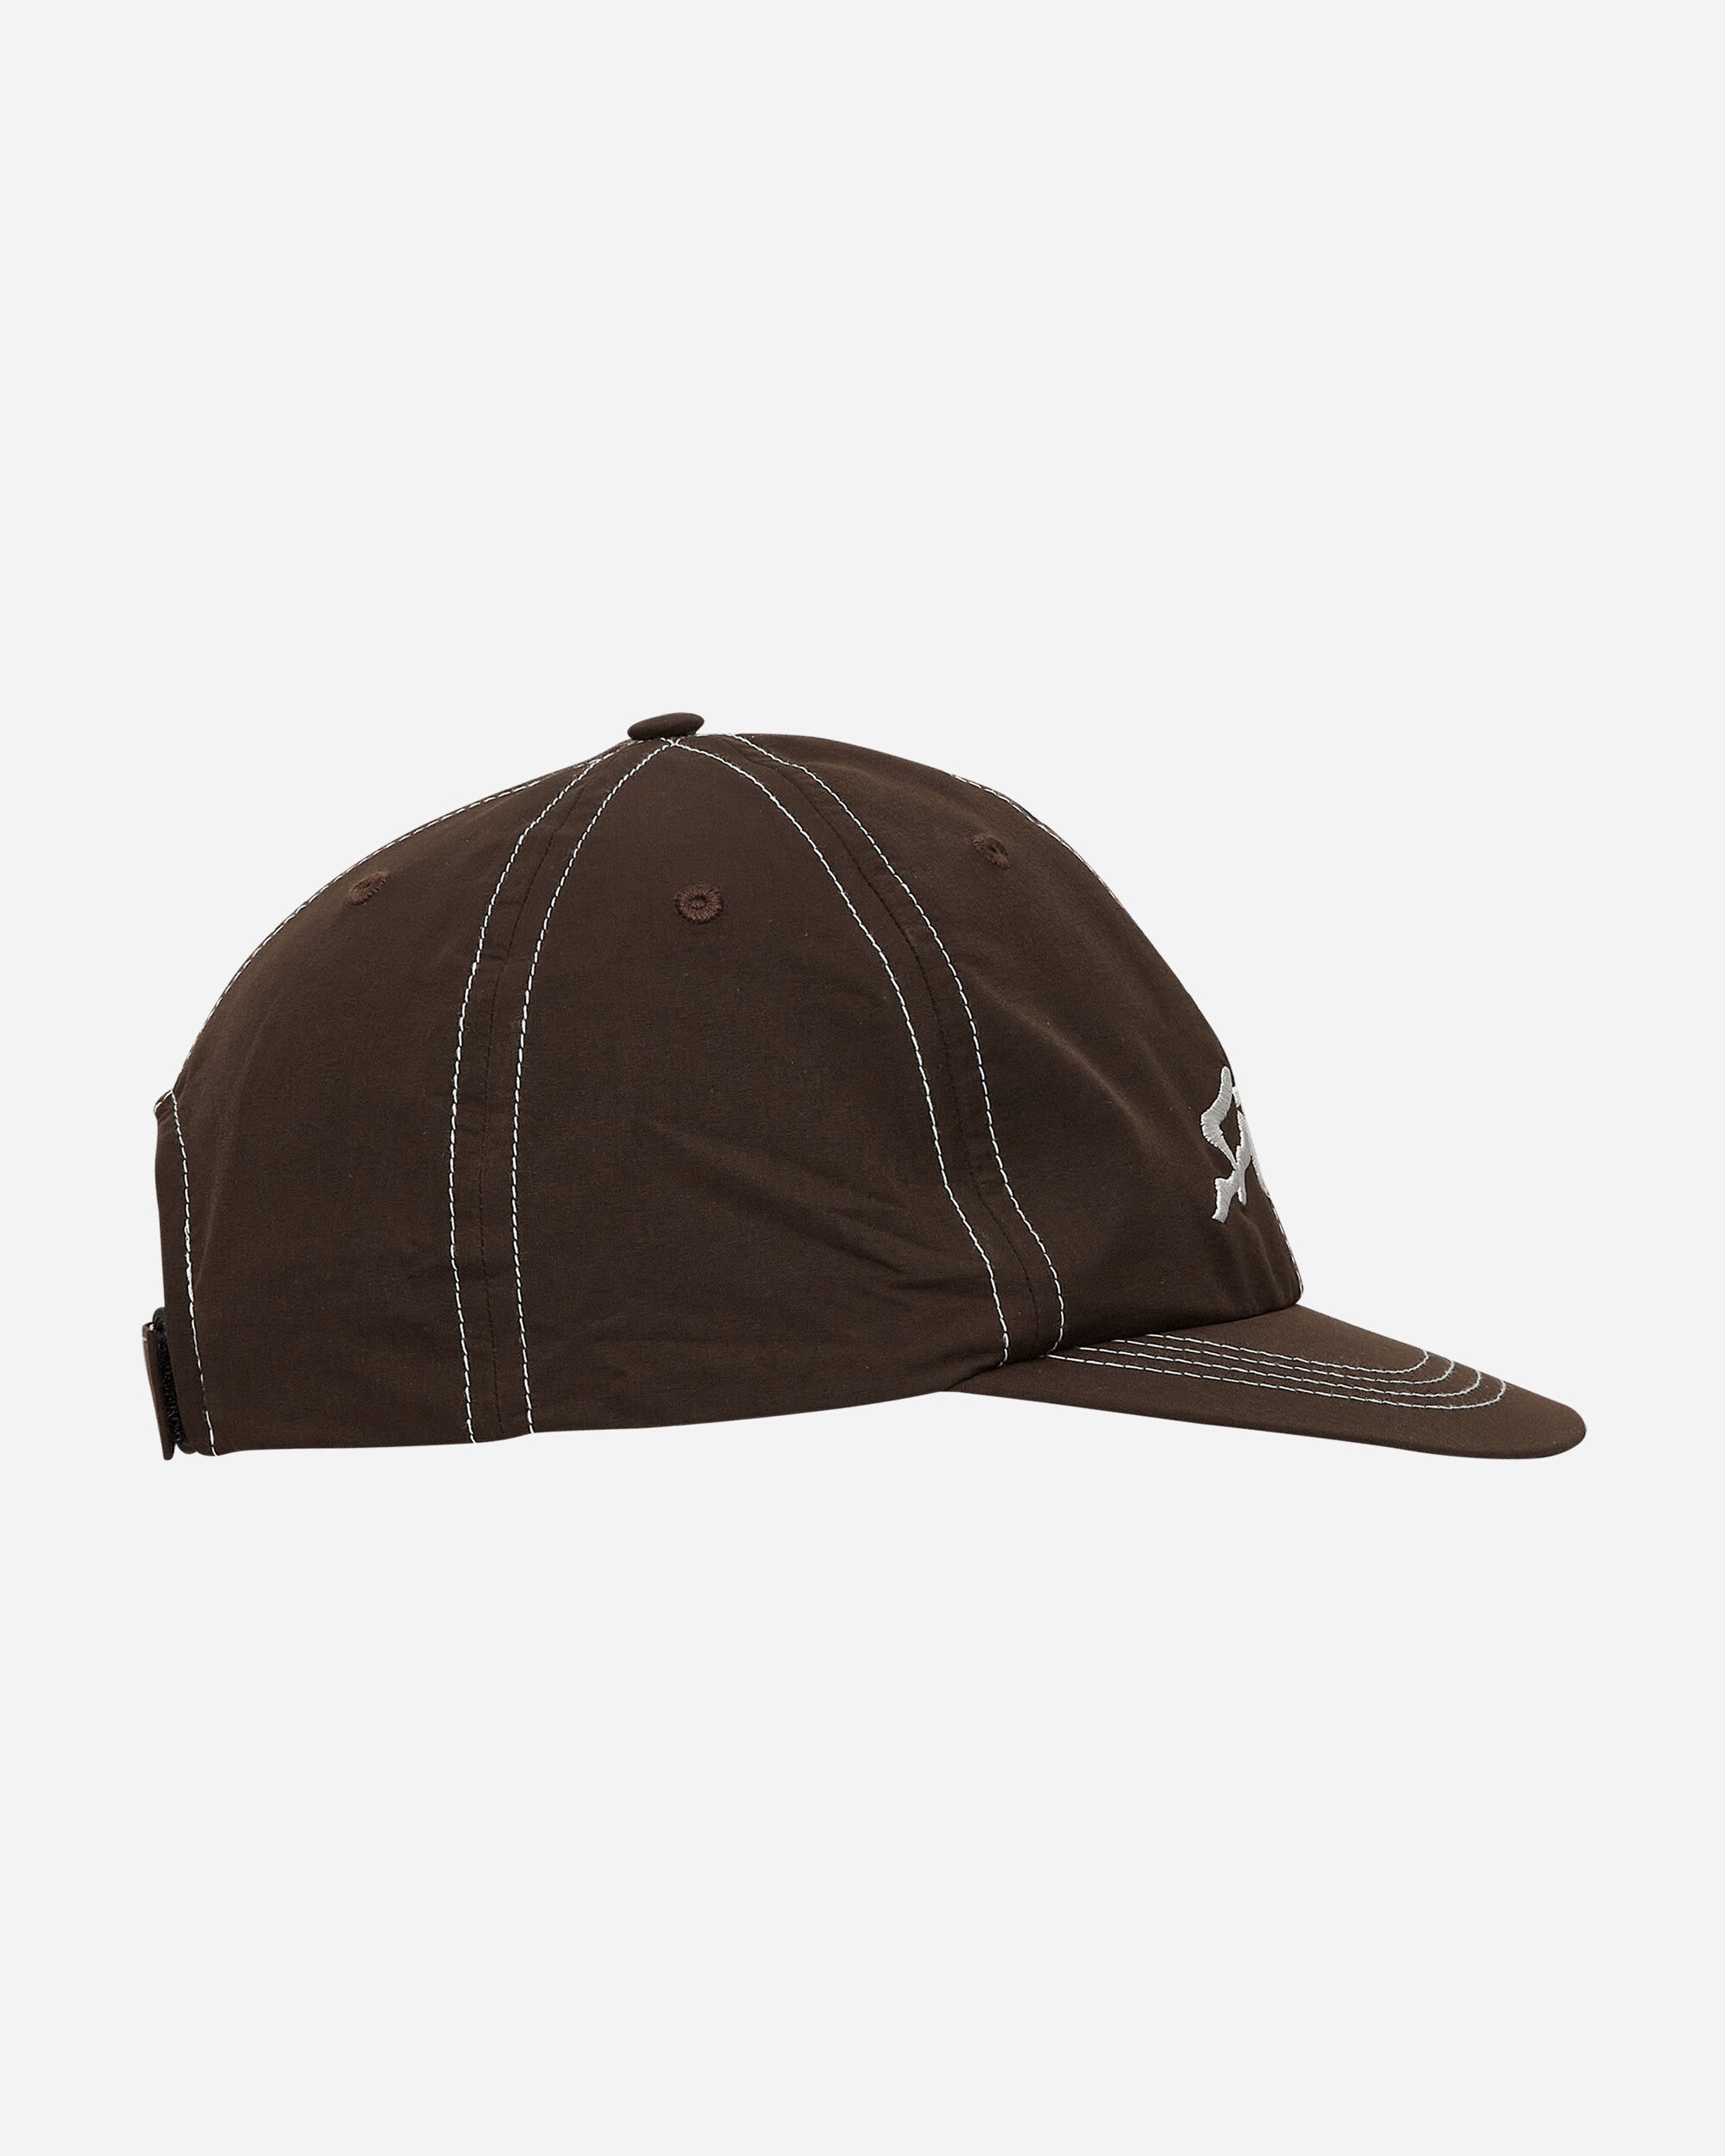 Satisfy Peaceshell Running Cap Brown Hats Caps 5347 BR-90S